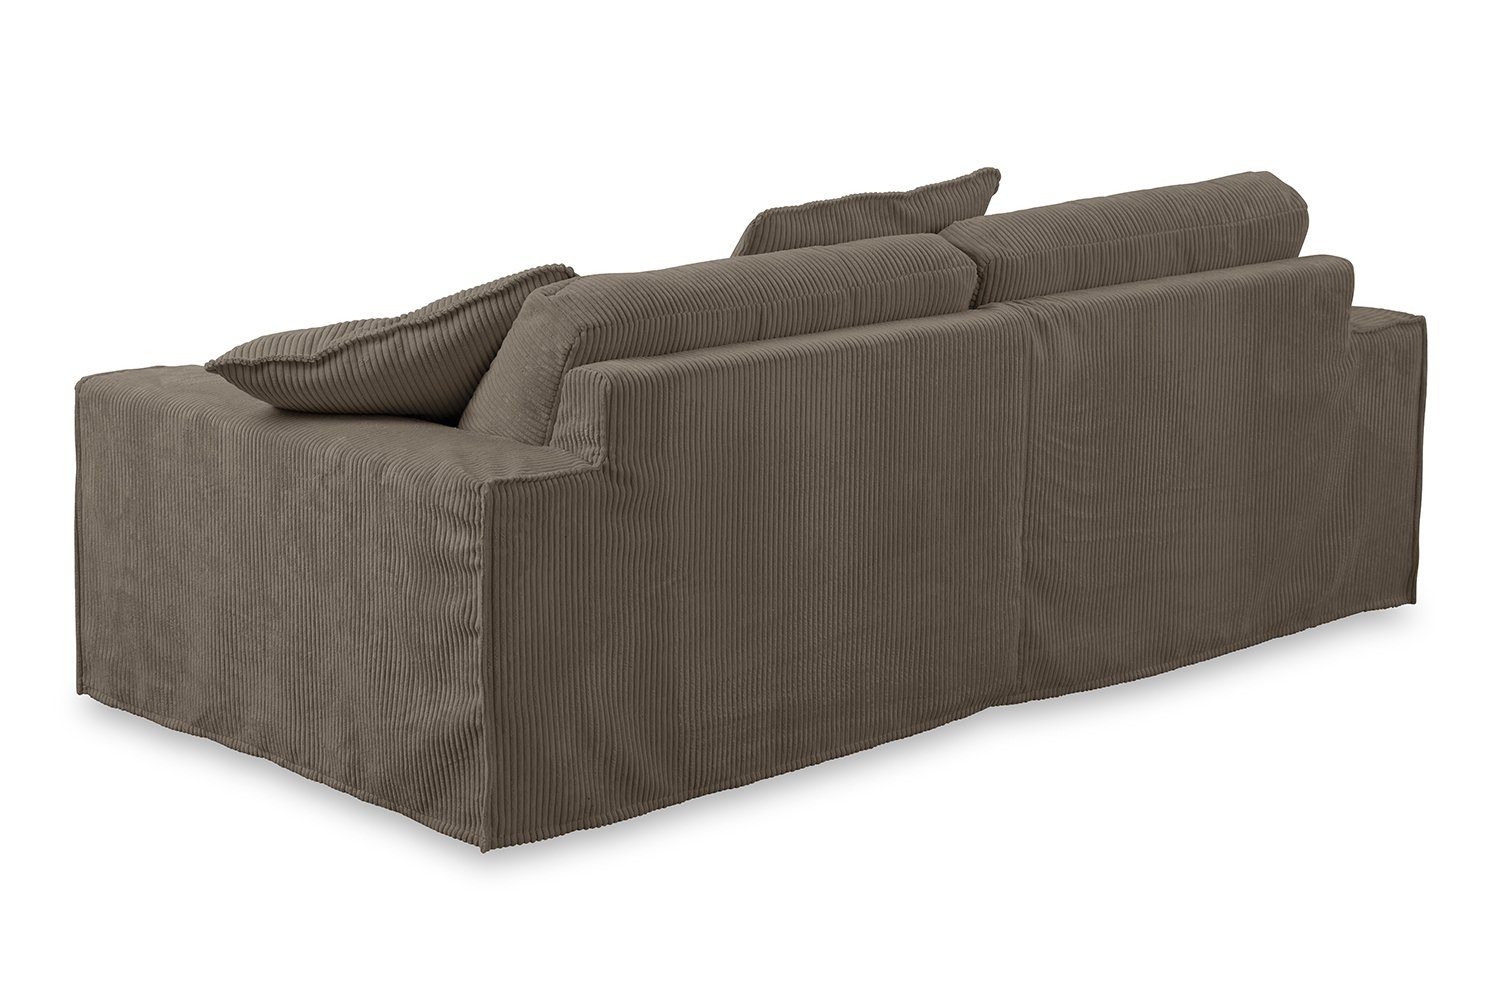 KAWOLA 3-Sitzer Farben Bezug graubraun Breiten versch. Cord Sofa abziehbar, graubraun NETTA, versch. und 